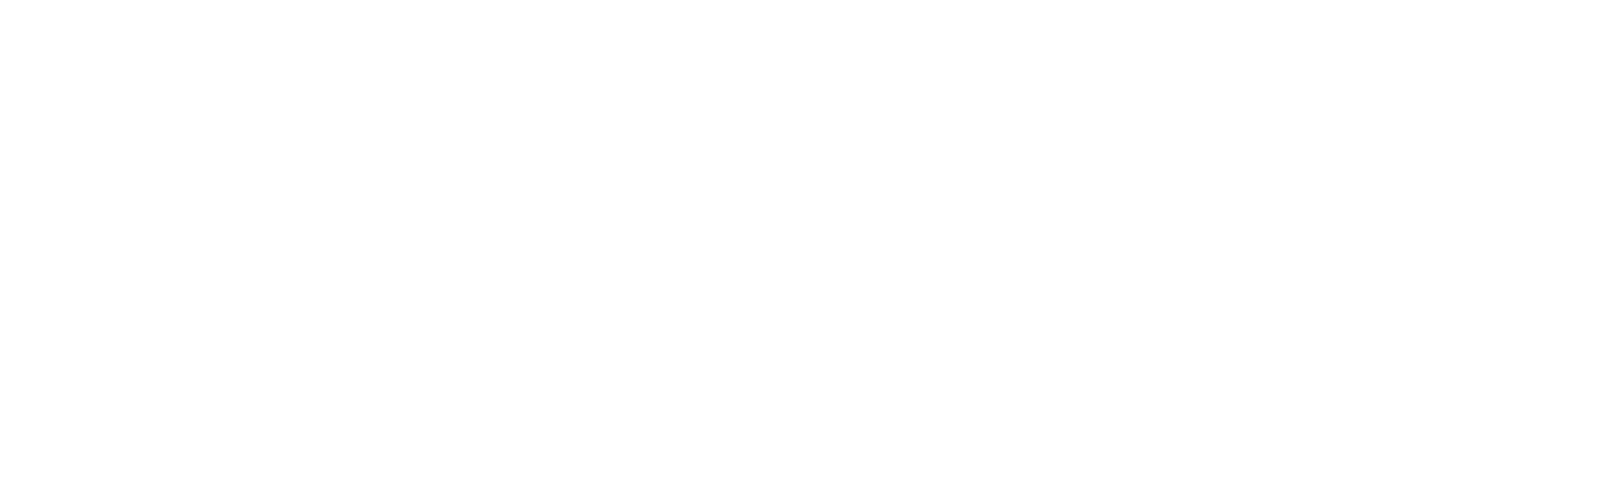 Maître Sarah ALLOUCHE